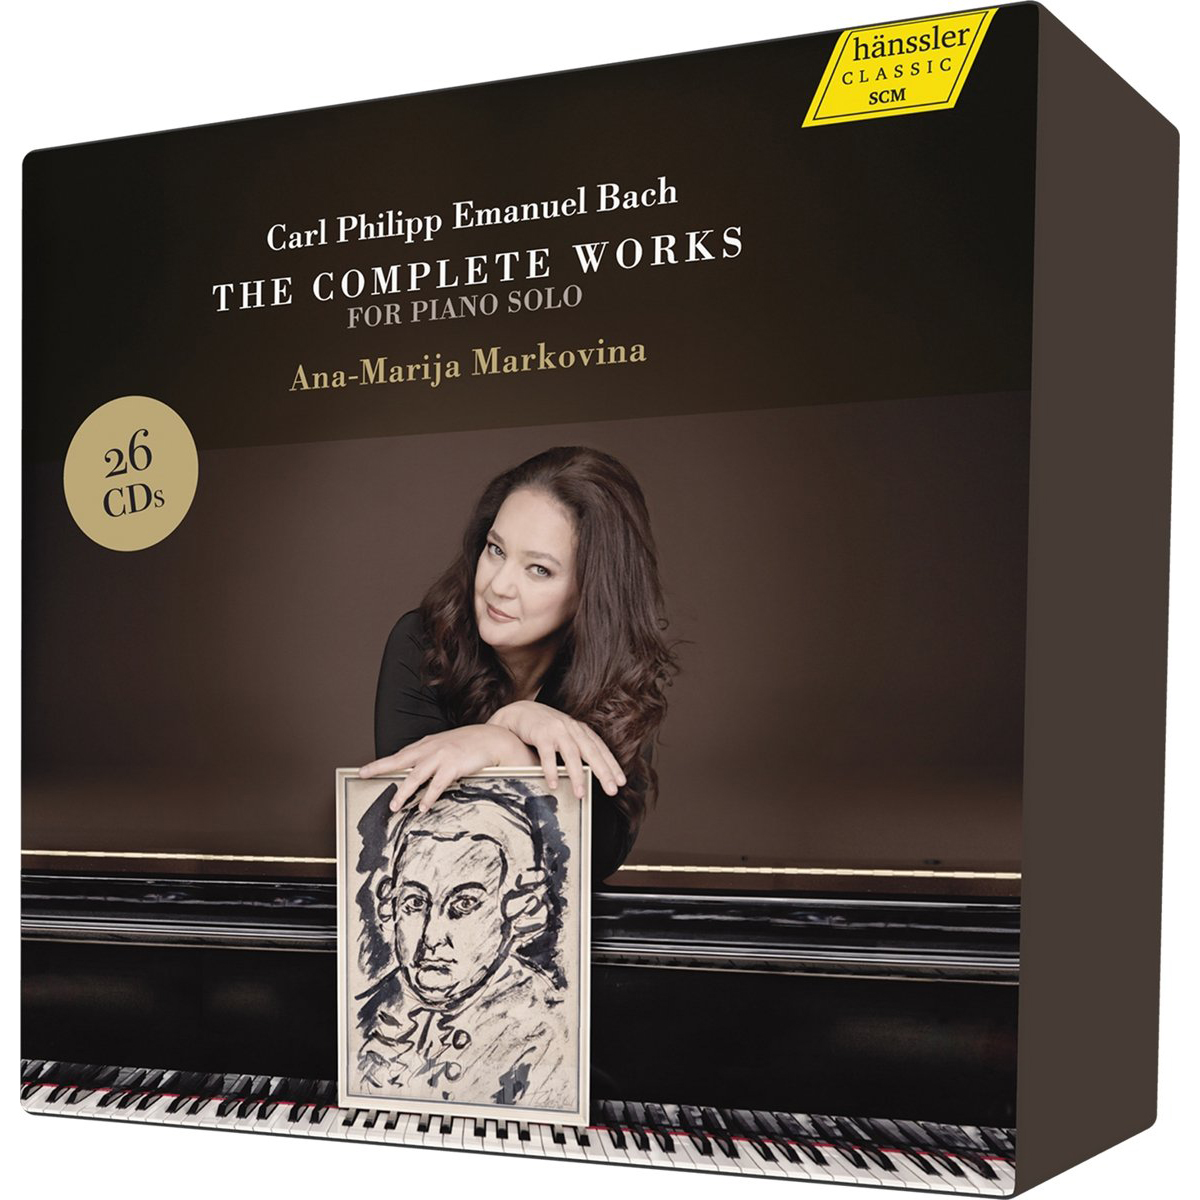 Carl Philipp Emanuel Bach • Œuvres pour piano • Intégrale • The complete works • 26 CD Box • Hänssler Classic 98003 • Anna-Marija Markovina